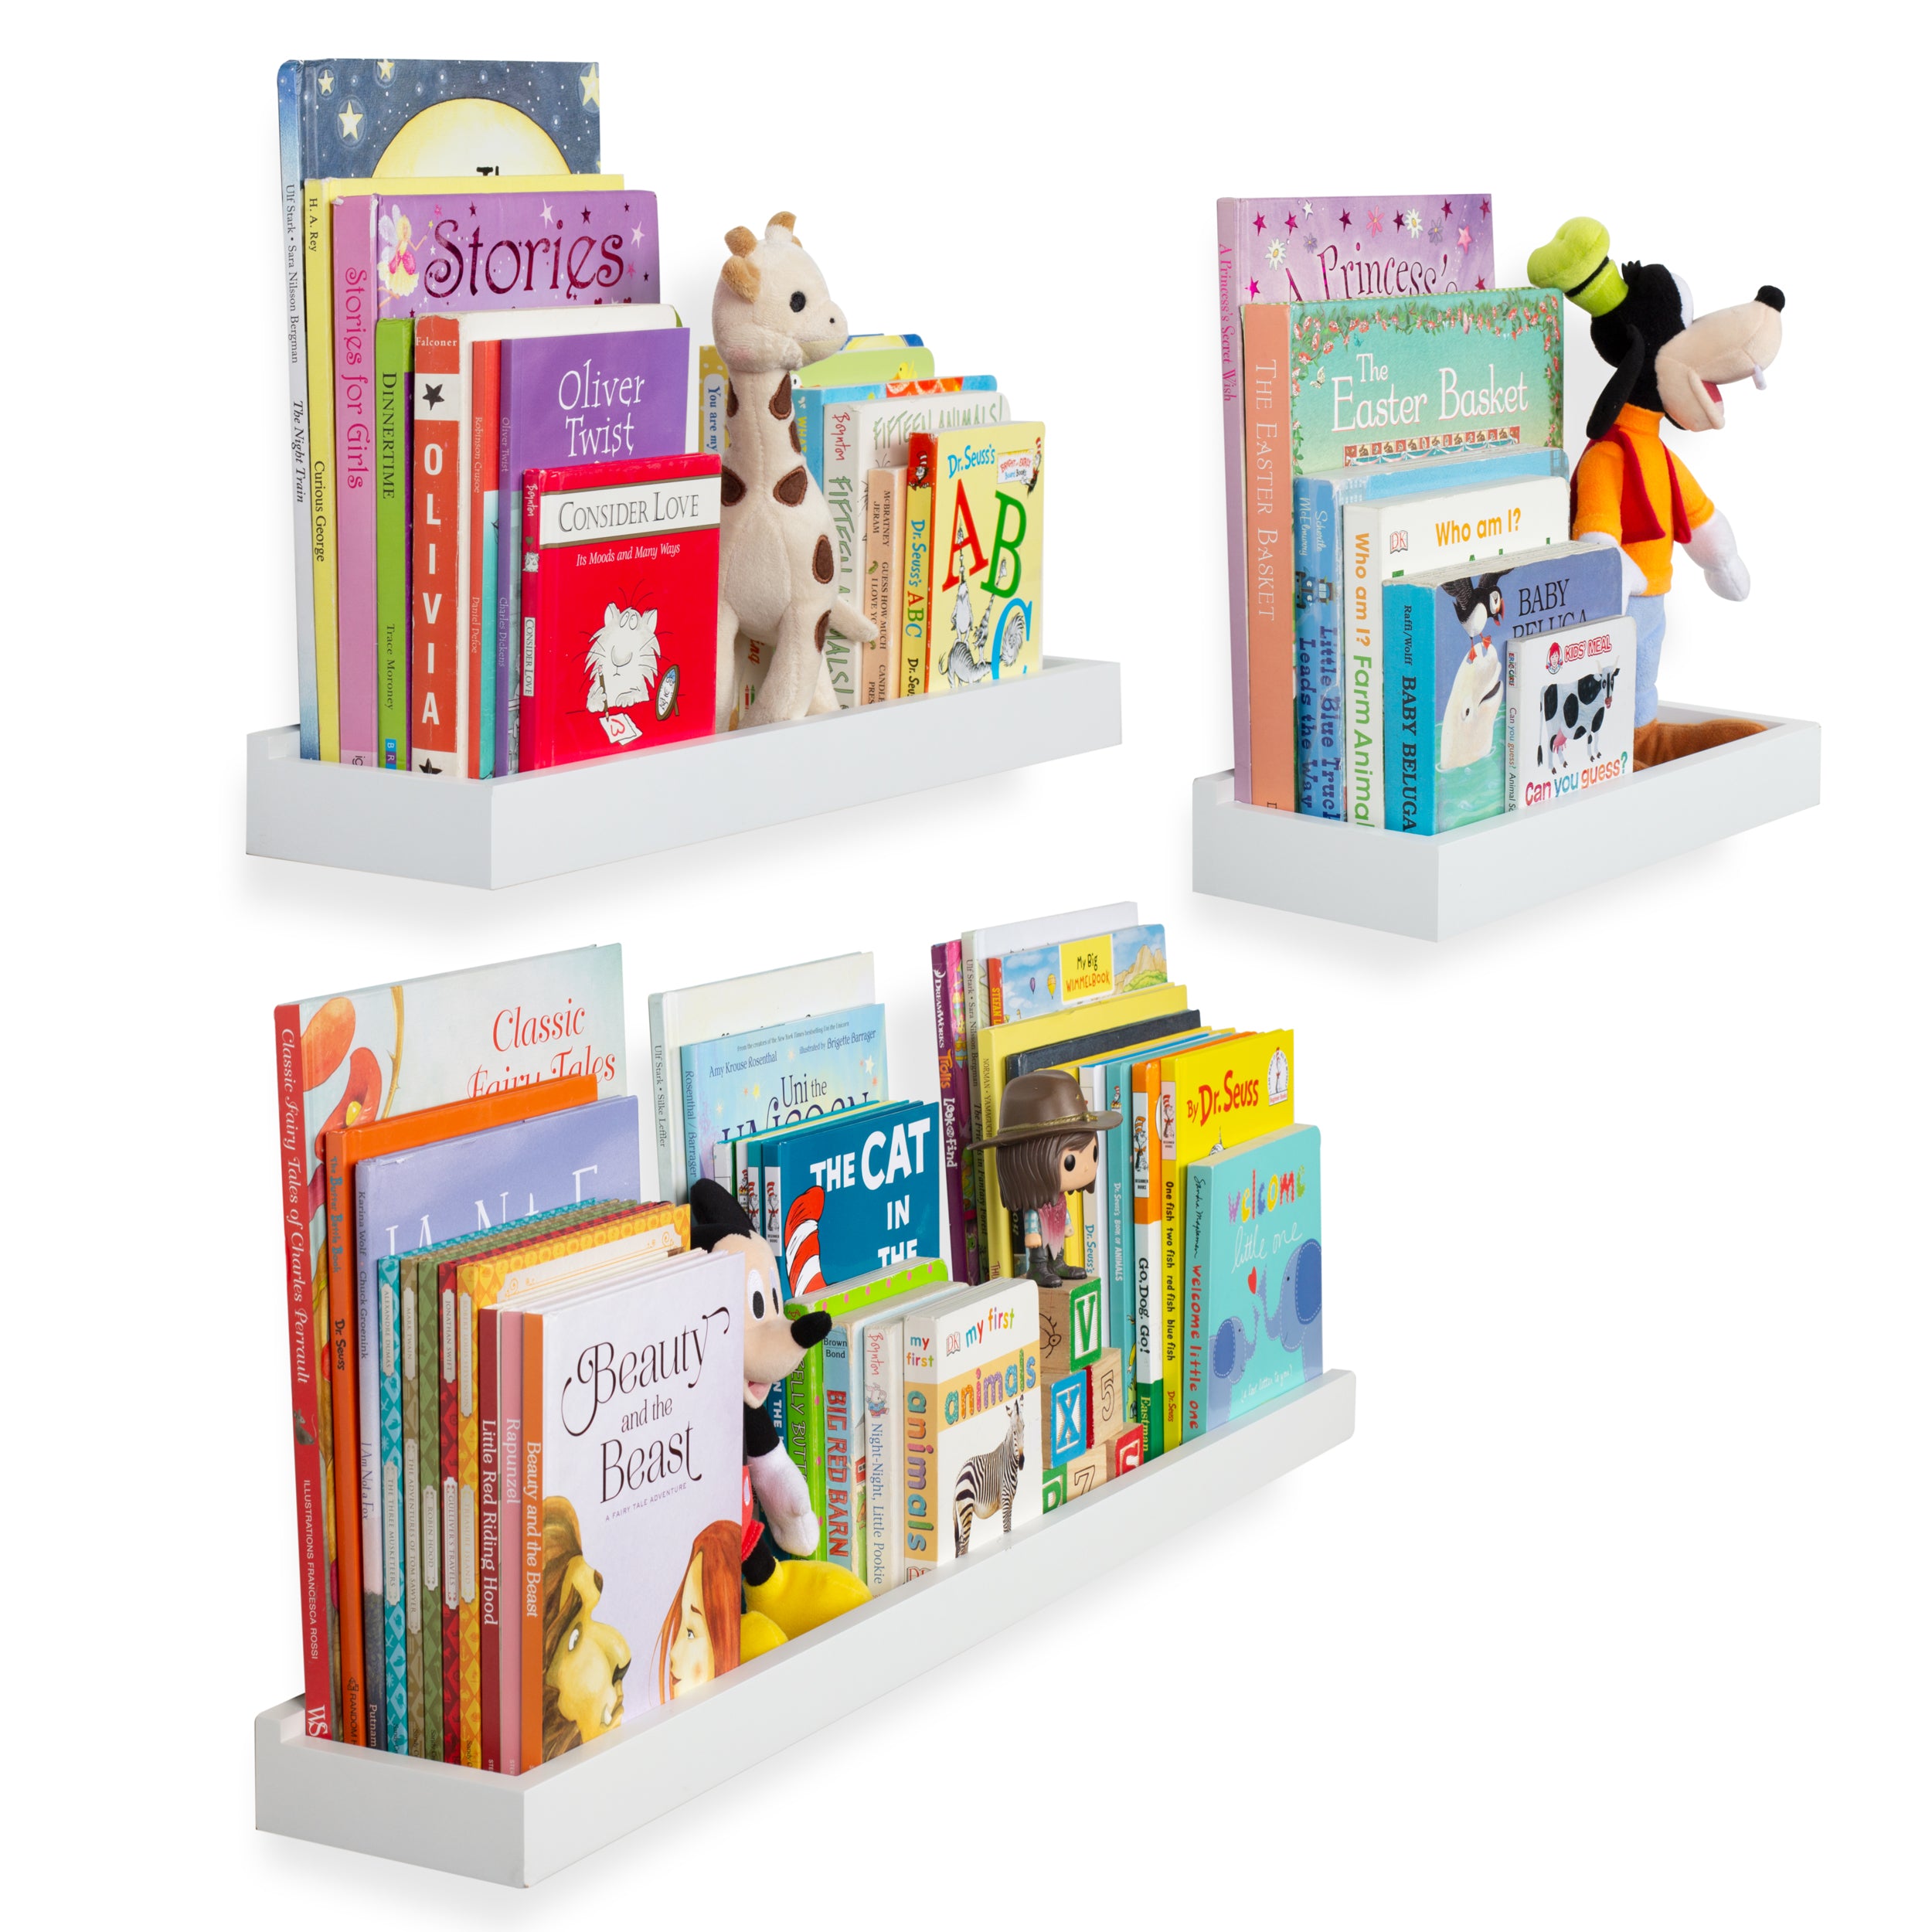 PHILLY Floating Shelves Wall Bookshelf and Nursery Decor - Multisize - Set of 3 - White - Wallniture